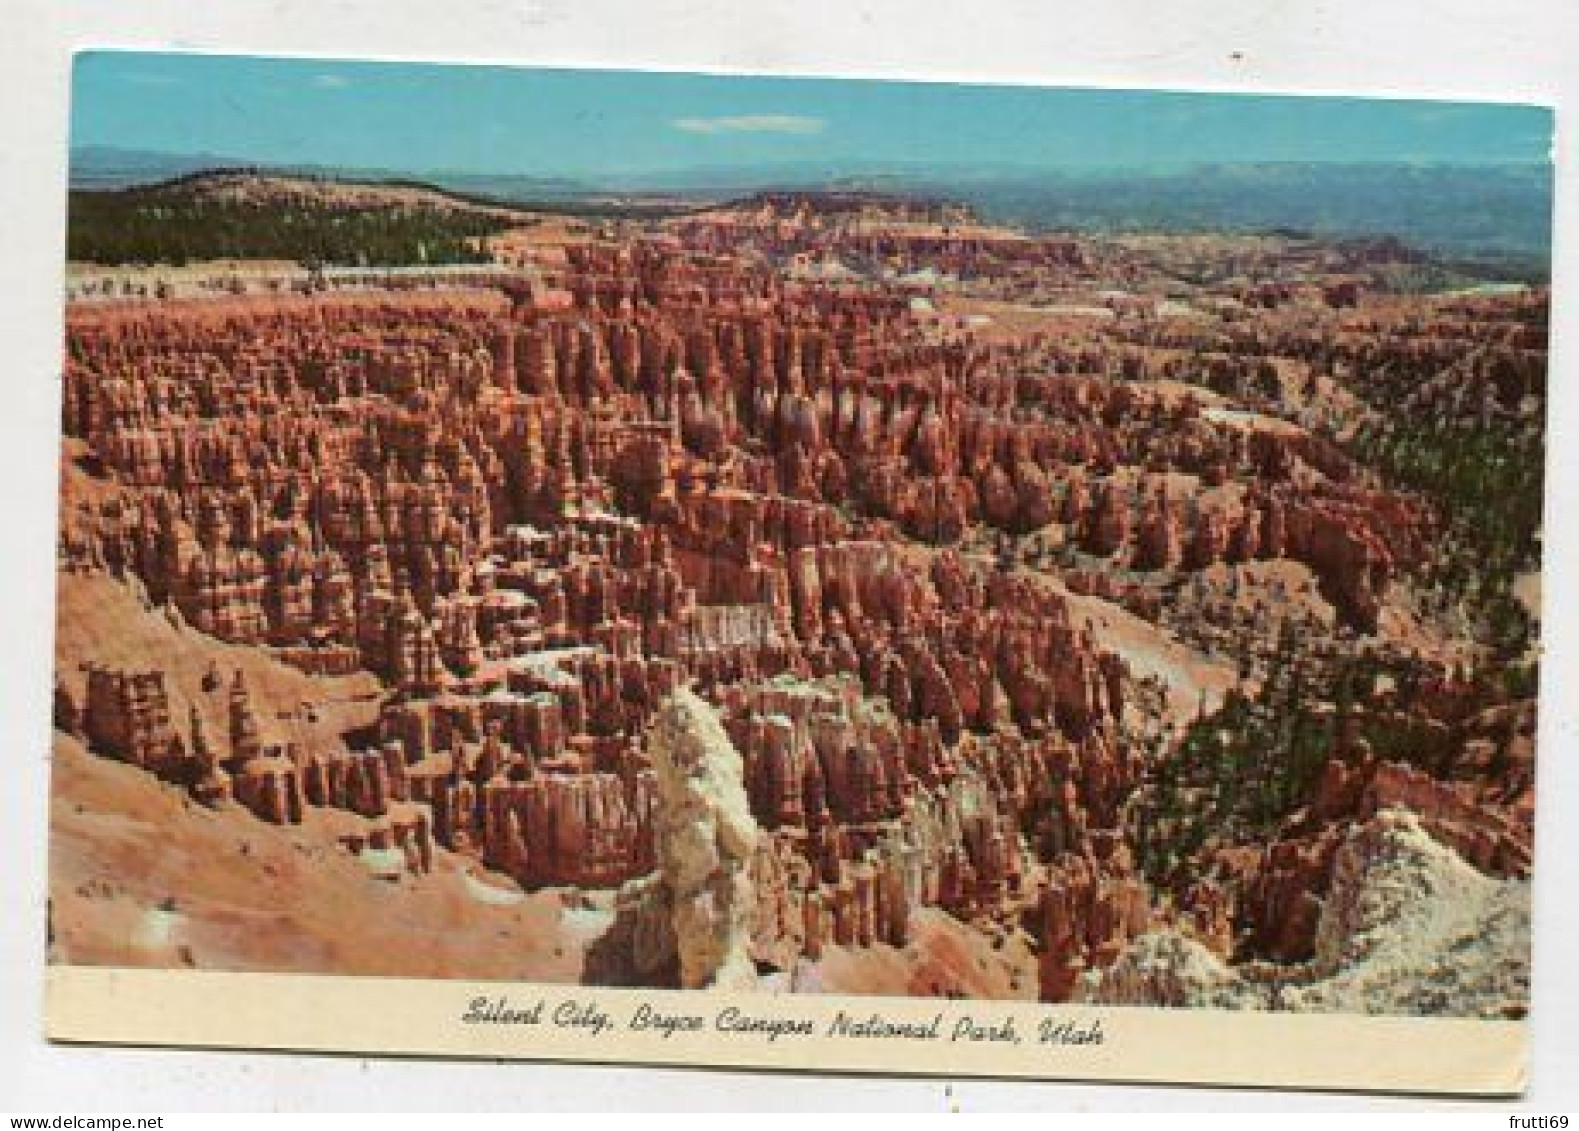 AK 135550 USA - Utah - Bryce Canyon National Park - Silent City - Bryce Canyon